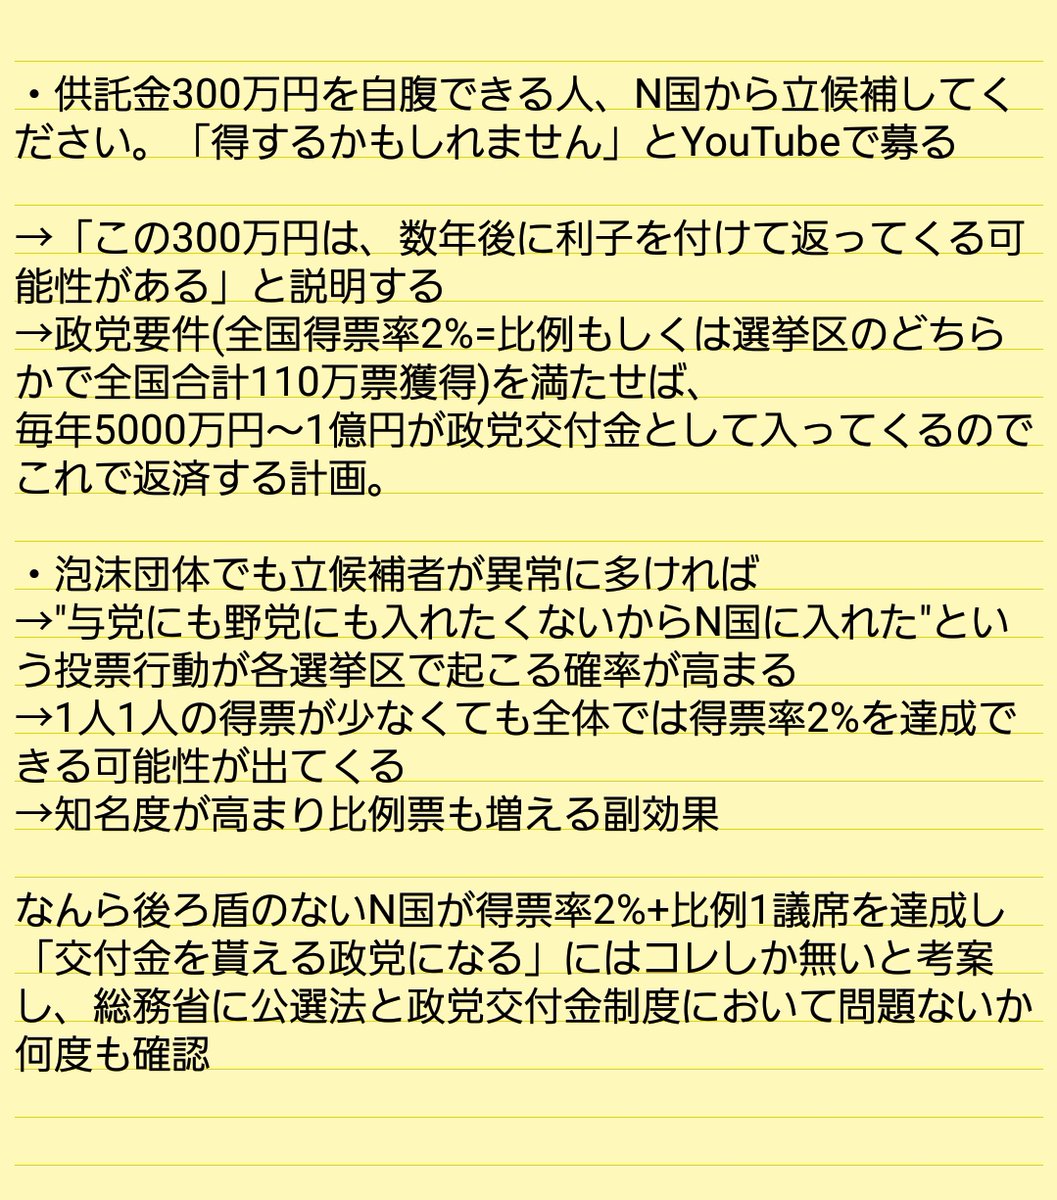 NHKを国民を守る党が躍進した理由は立花孝志代表の天才的な戦略にあった！